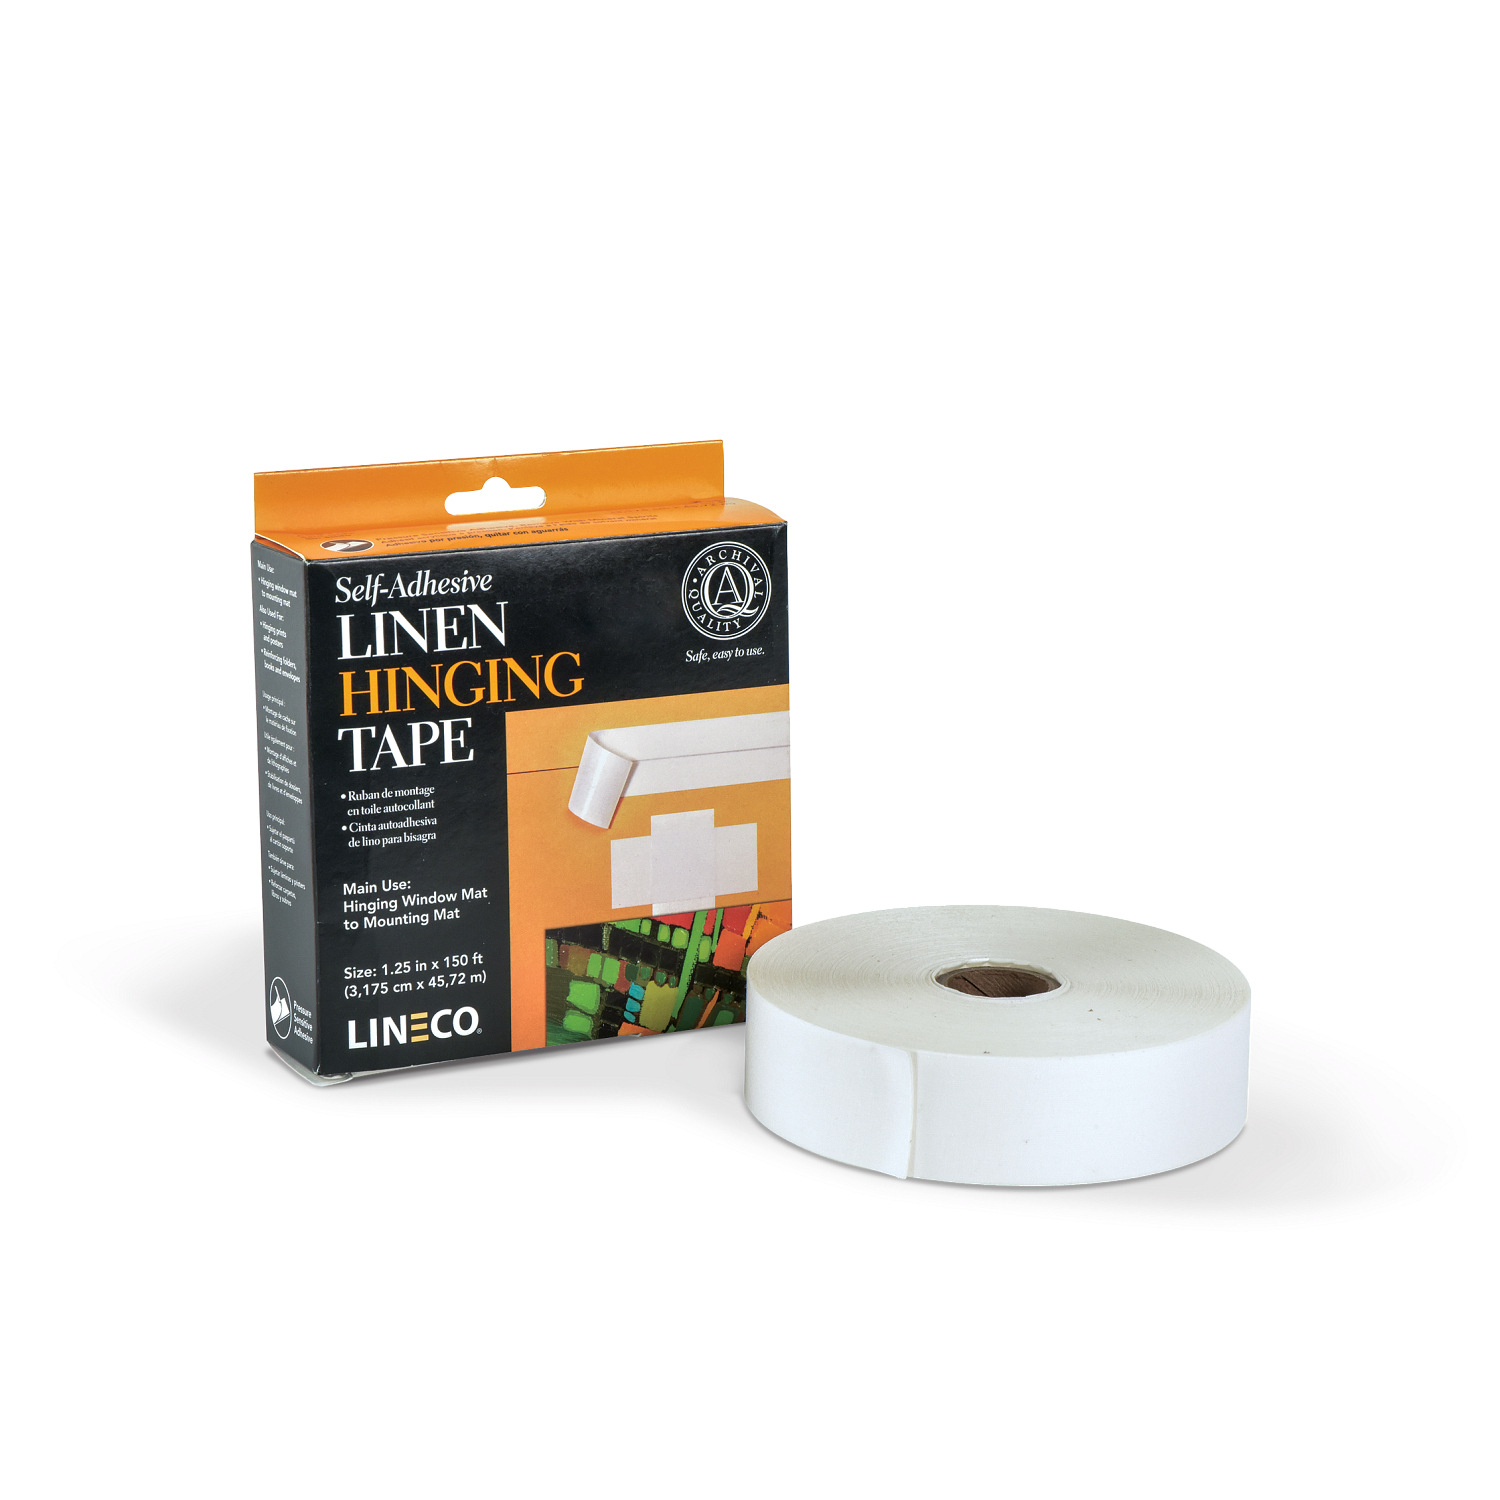 Linen Hinging Tape (50 yds.), Tape